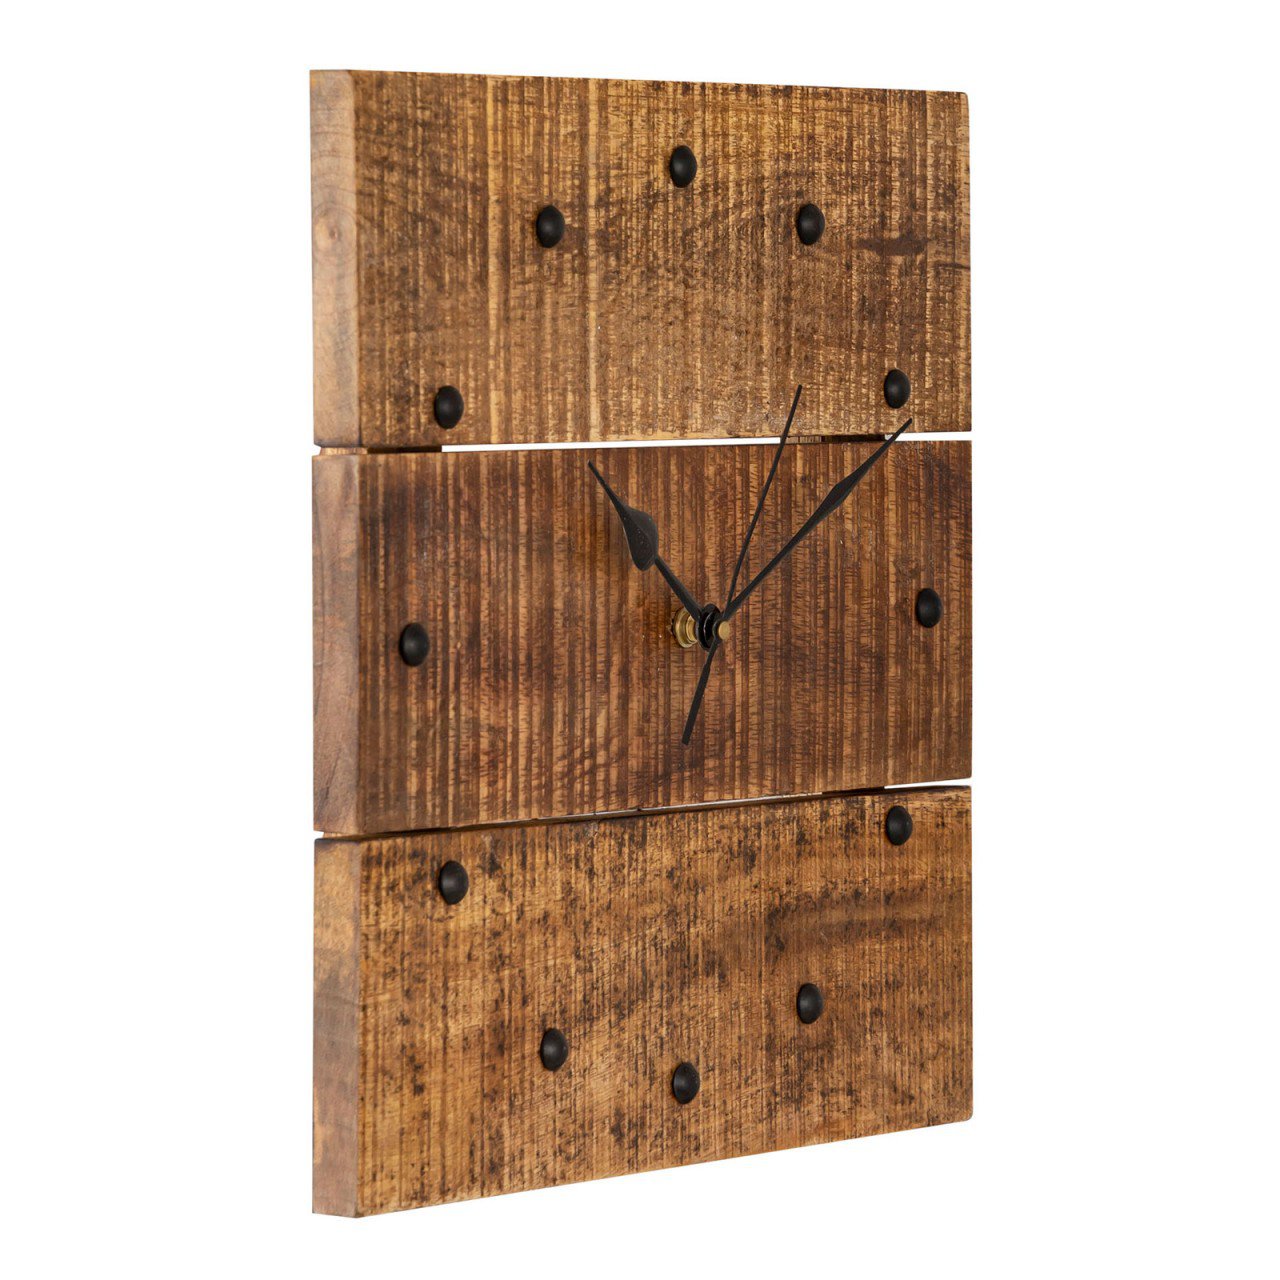 Wandklok houten klok 30x30cm wandklok hout woonkamer geruisloos vierkant gemaakt van mangohout